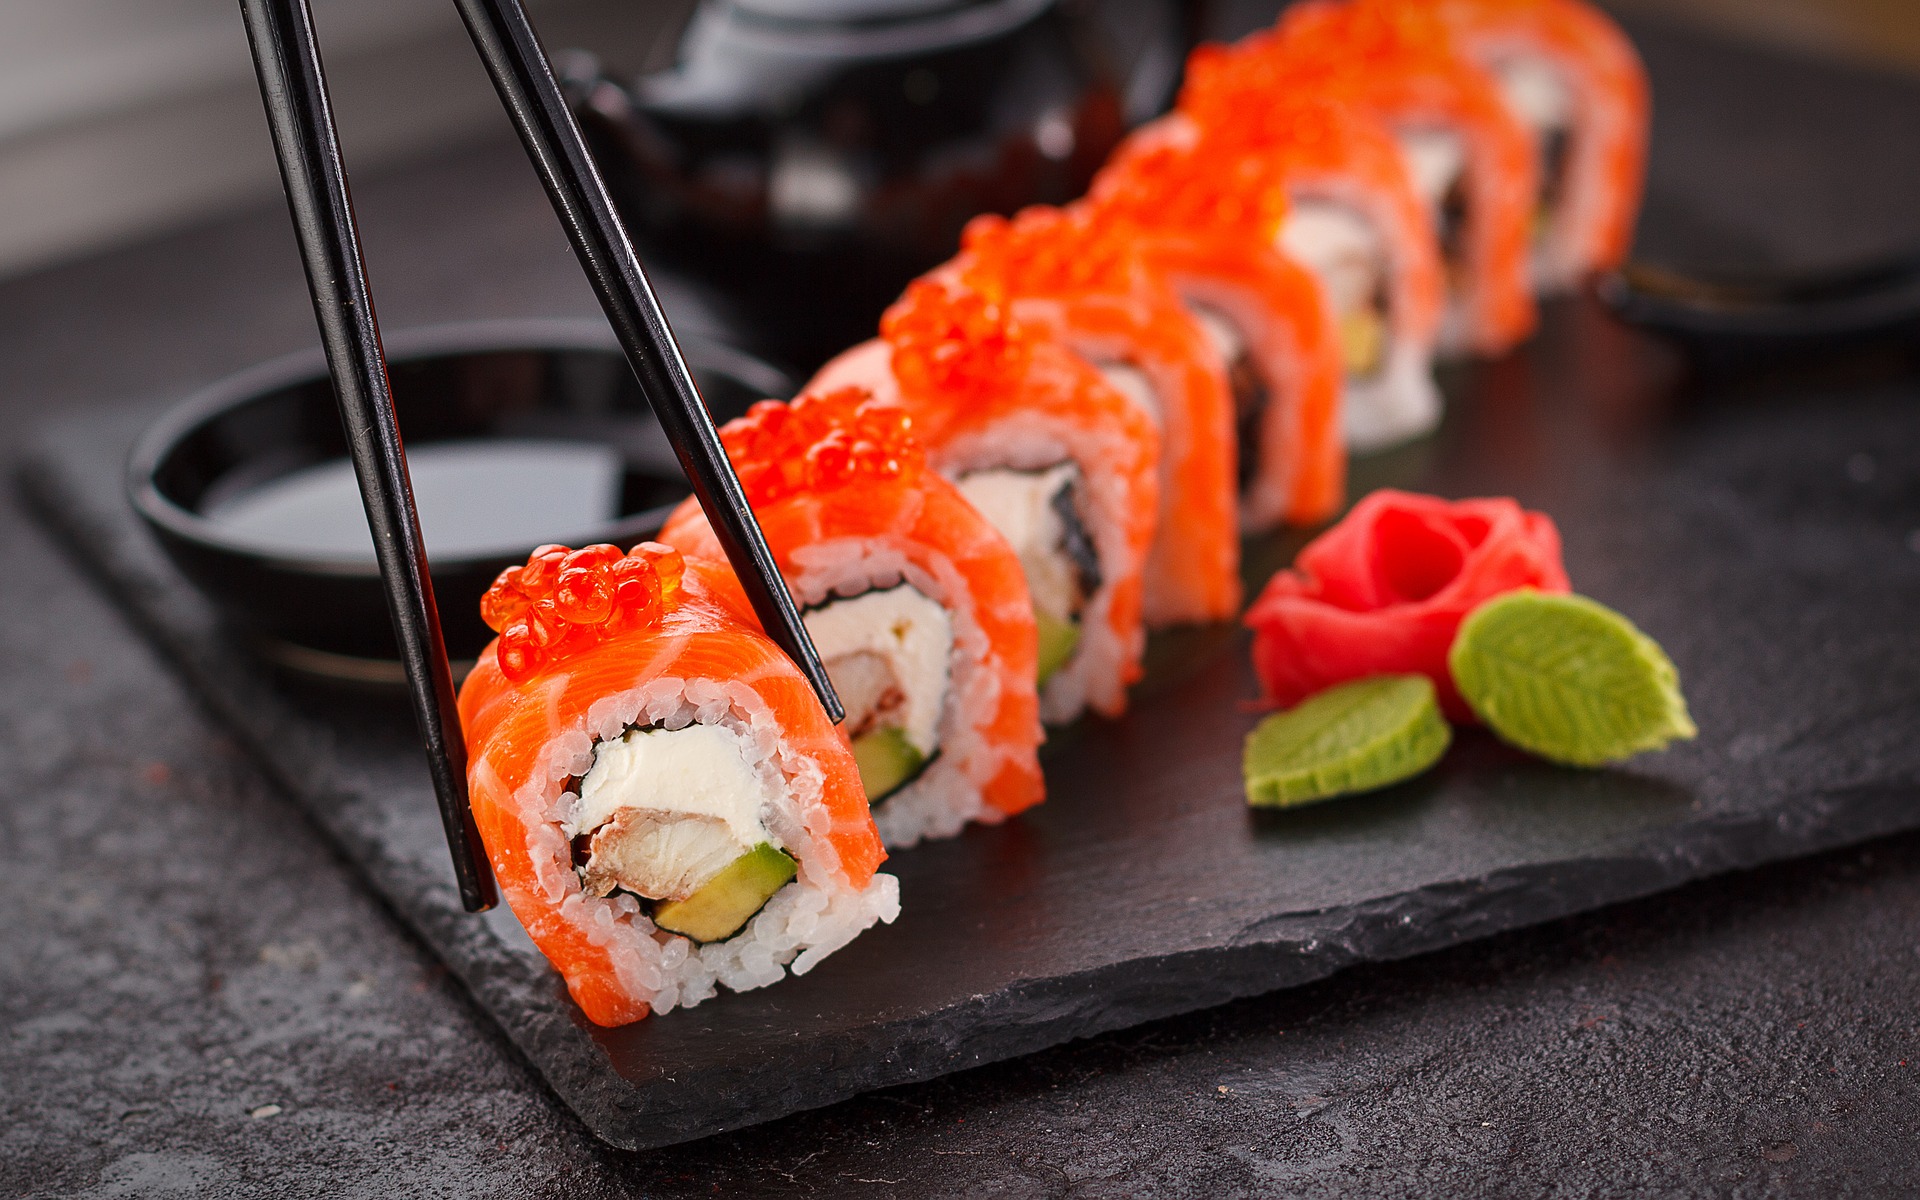 King West is home to several sushi restaurants (Image Credit: Pixabay).